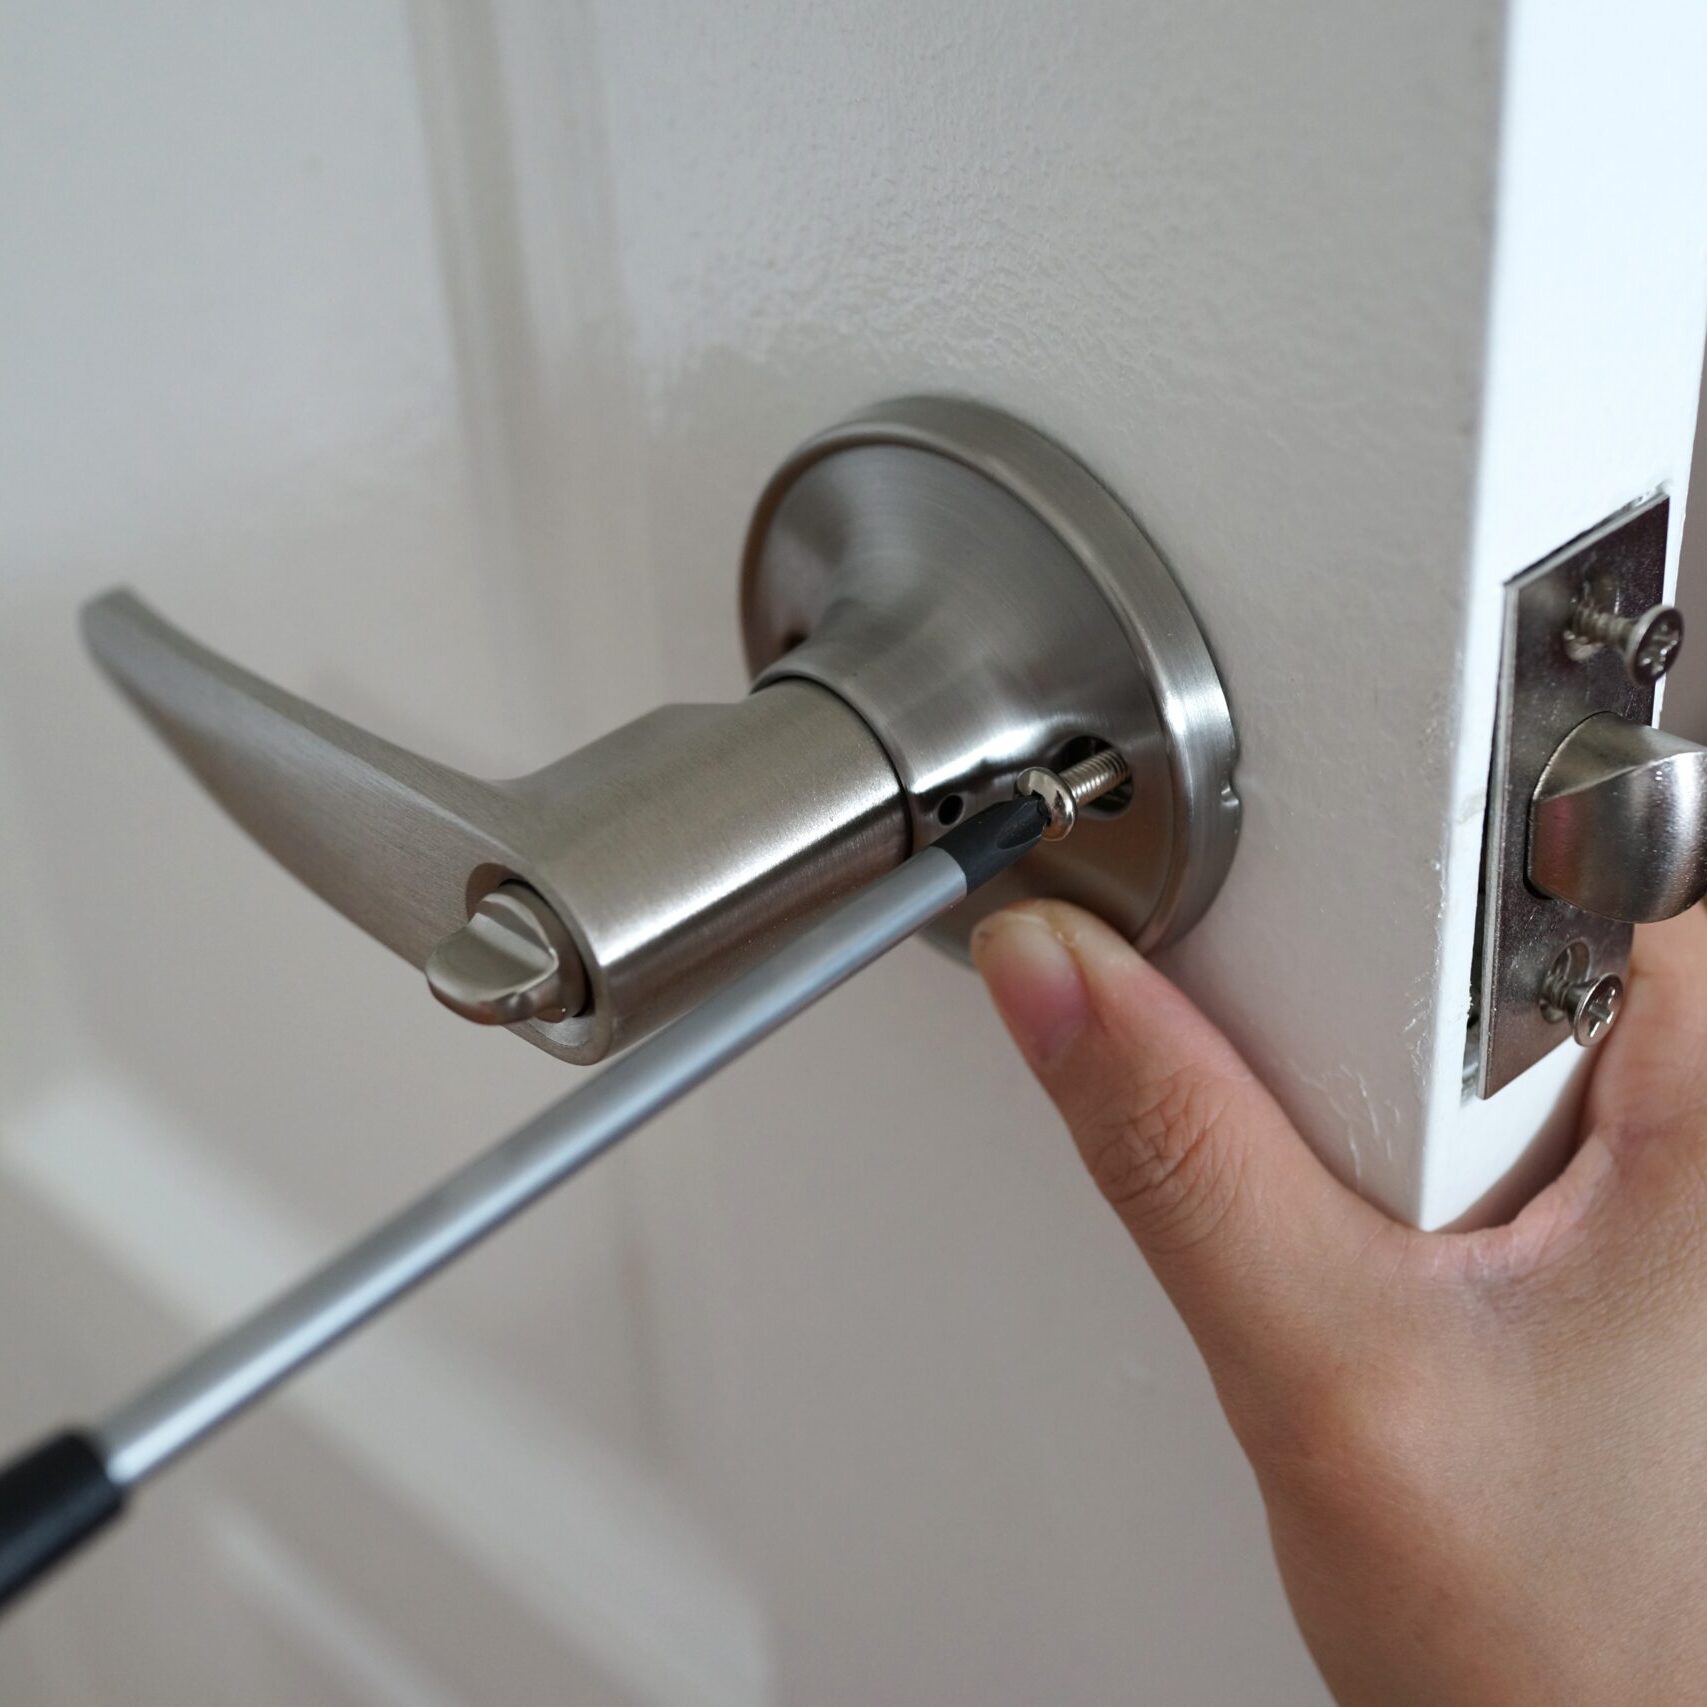 handyman-install-the-new-door-lock-in-new-house-2021-08-30-11-41-39-utc